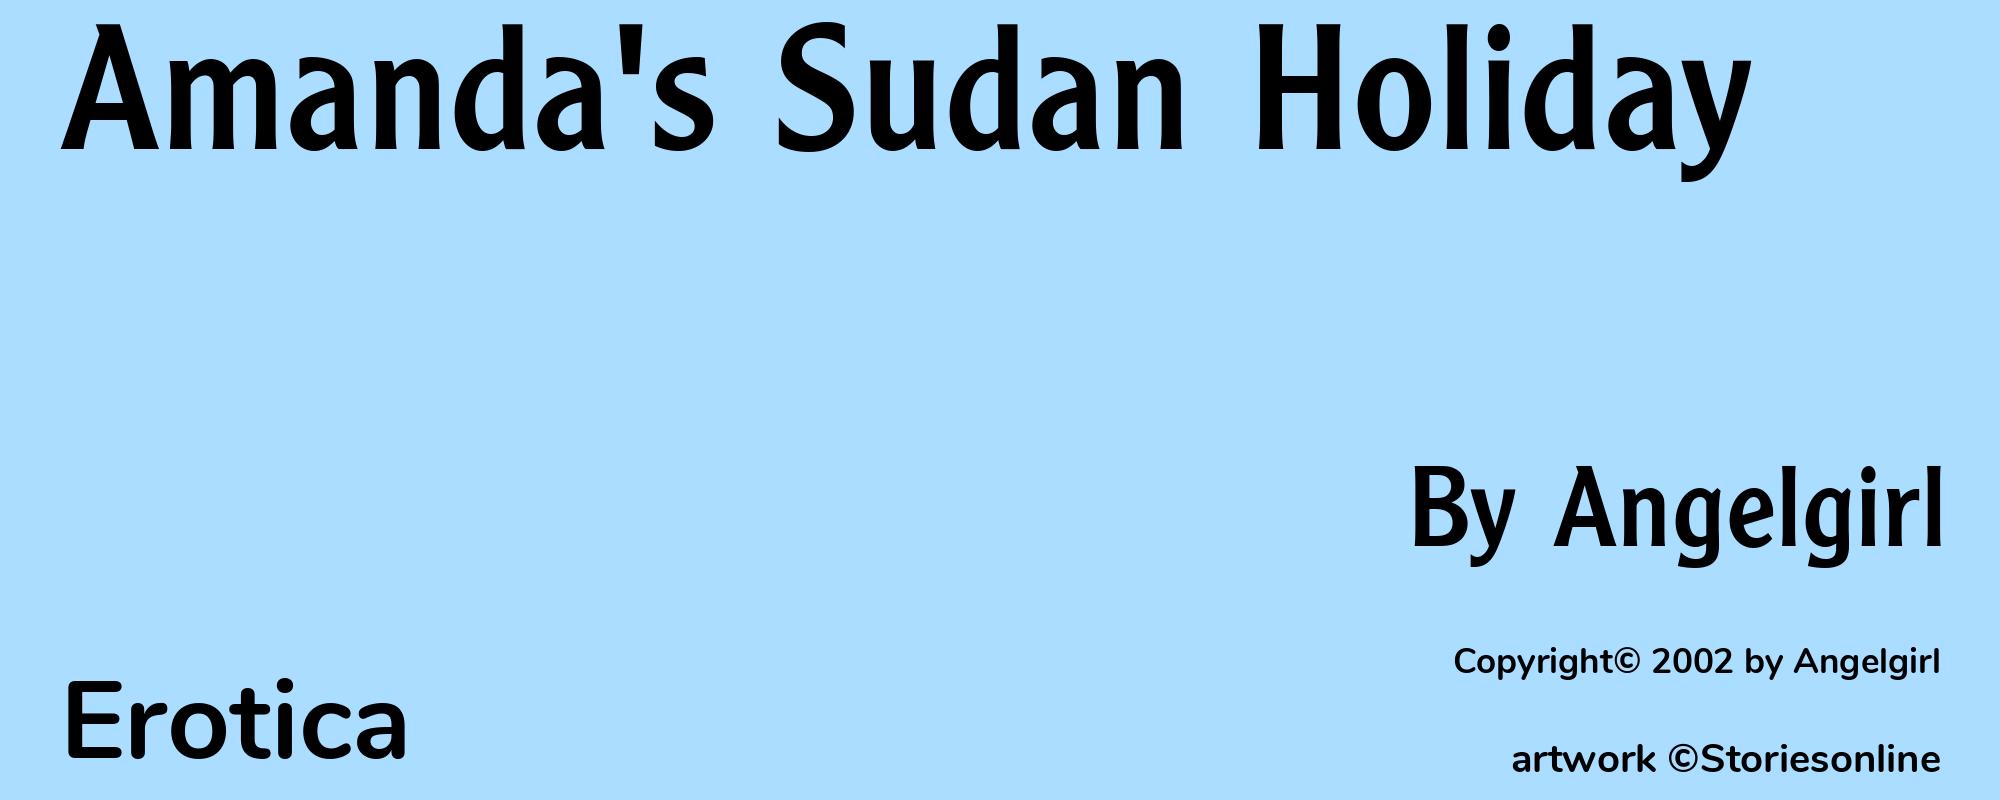 Amanda's Sudan Holiday - Cover